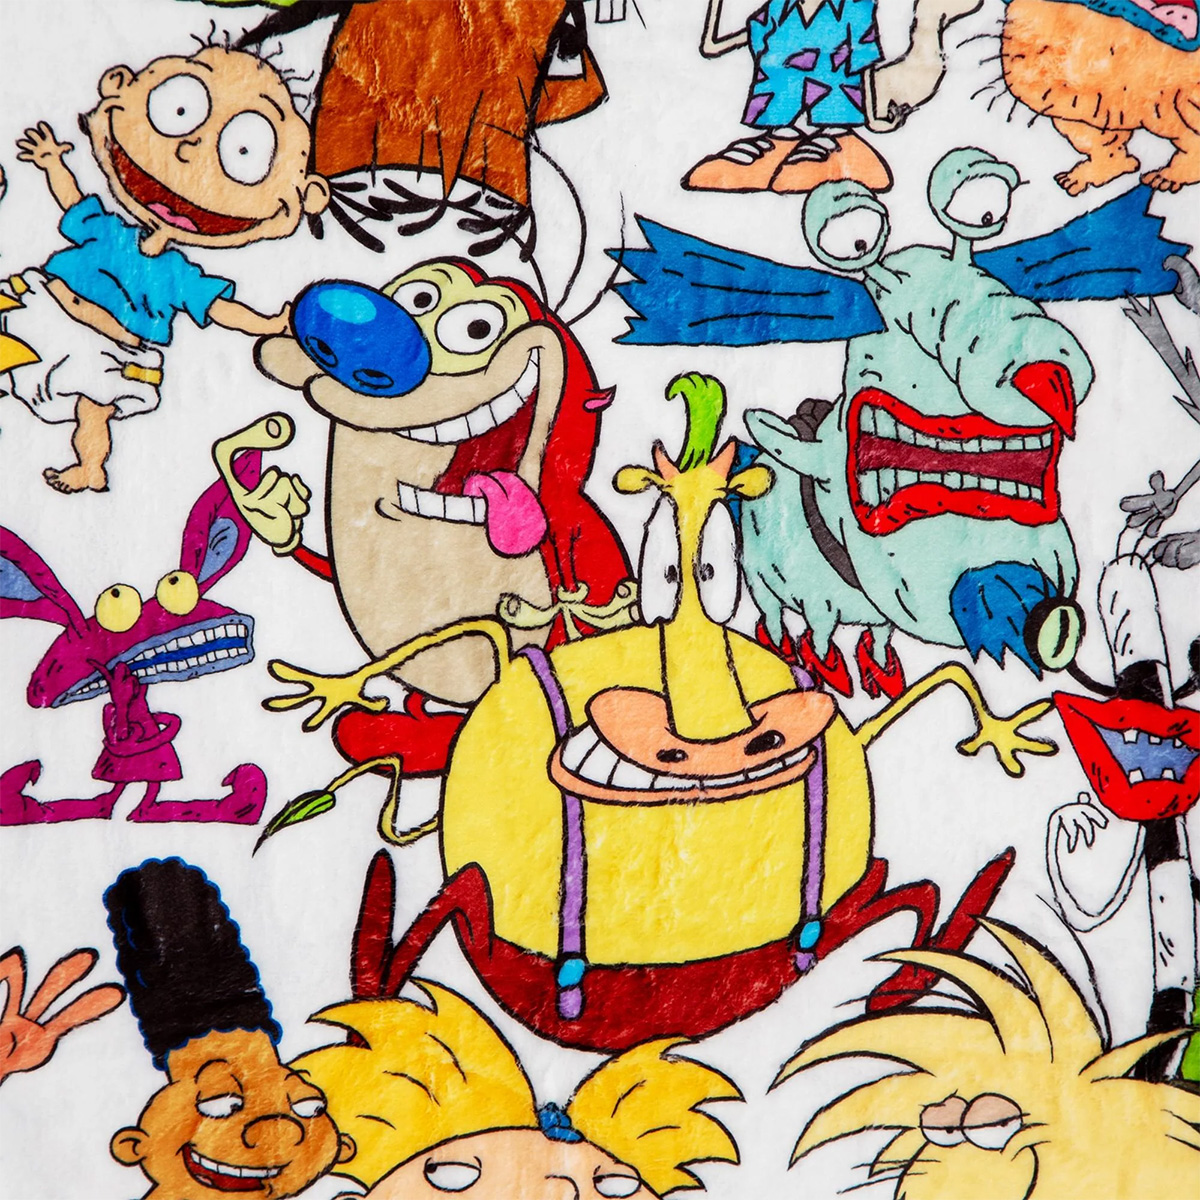 Nickelodeon Classic Cartoon Throw Blanket